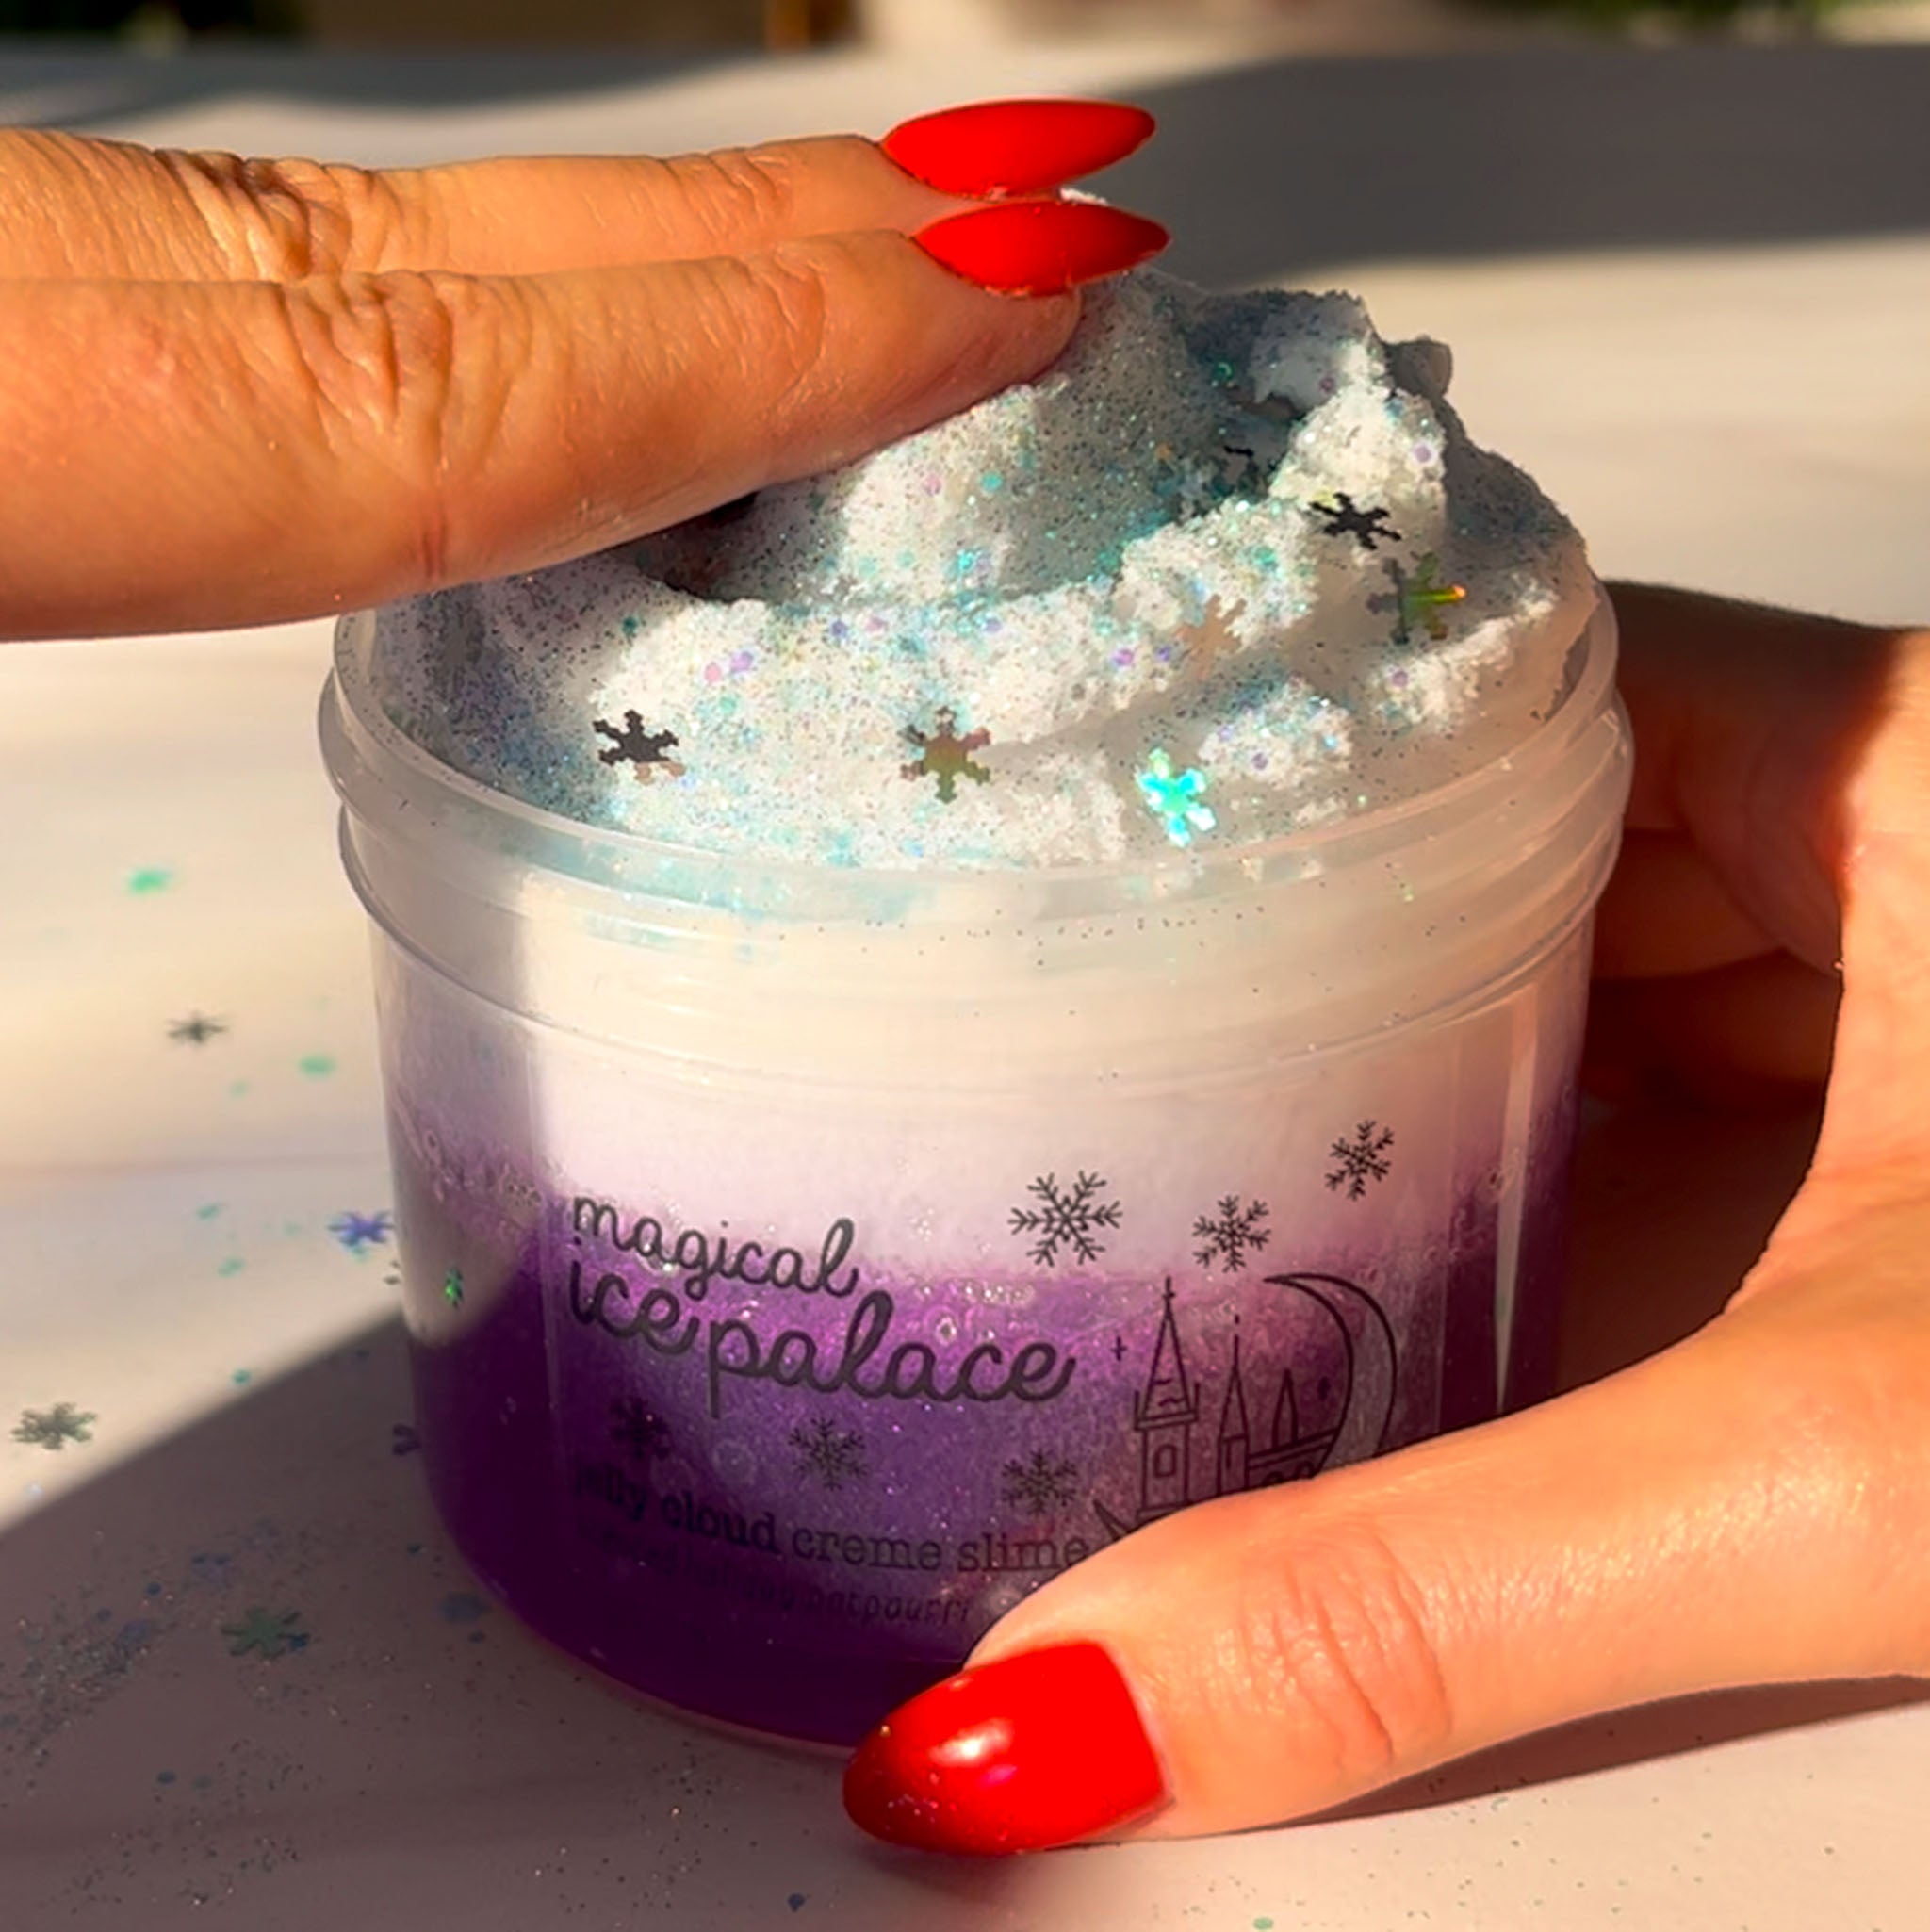 Magical Ice Palace Christmas Winter Glittery Pastel Purple Cloud Creme Slime Fantasies Shop 9oz Push